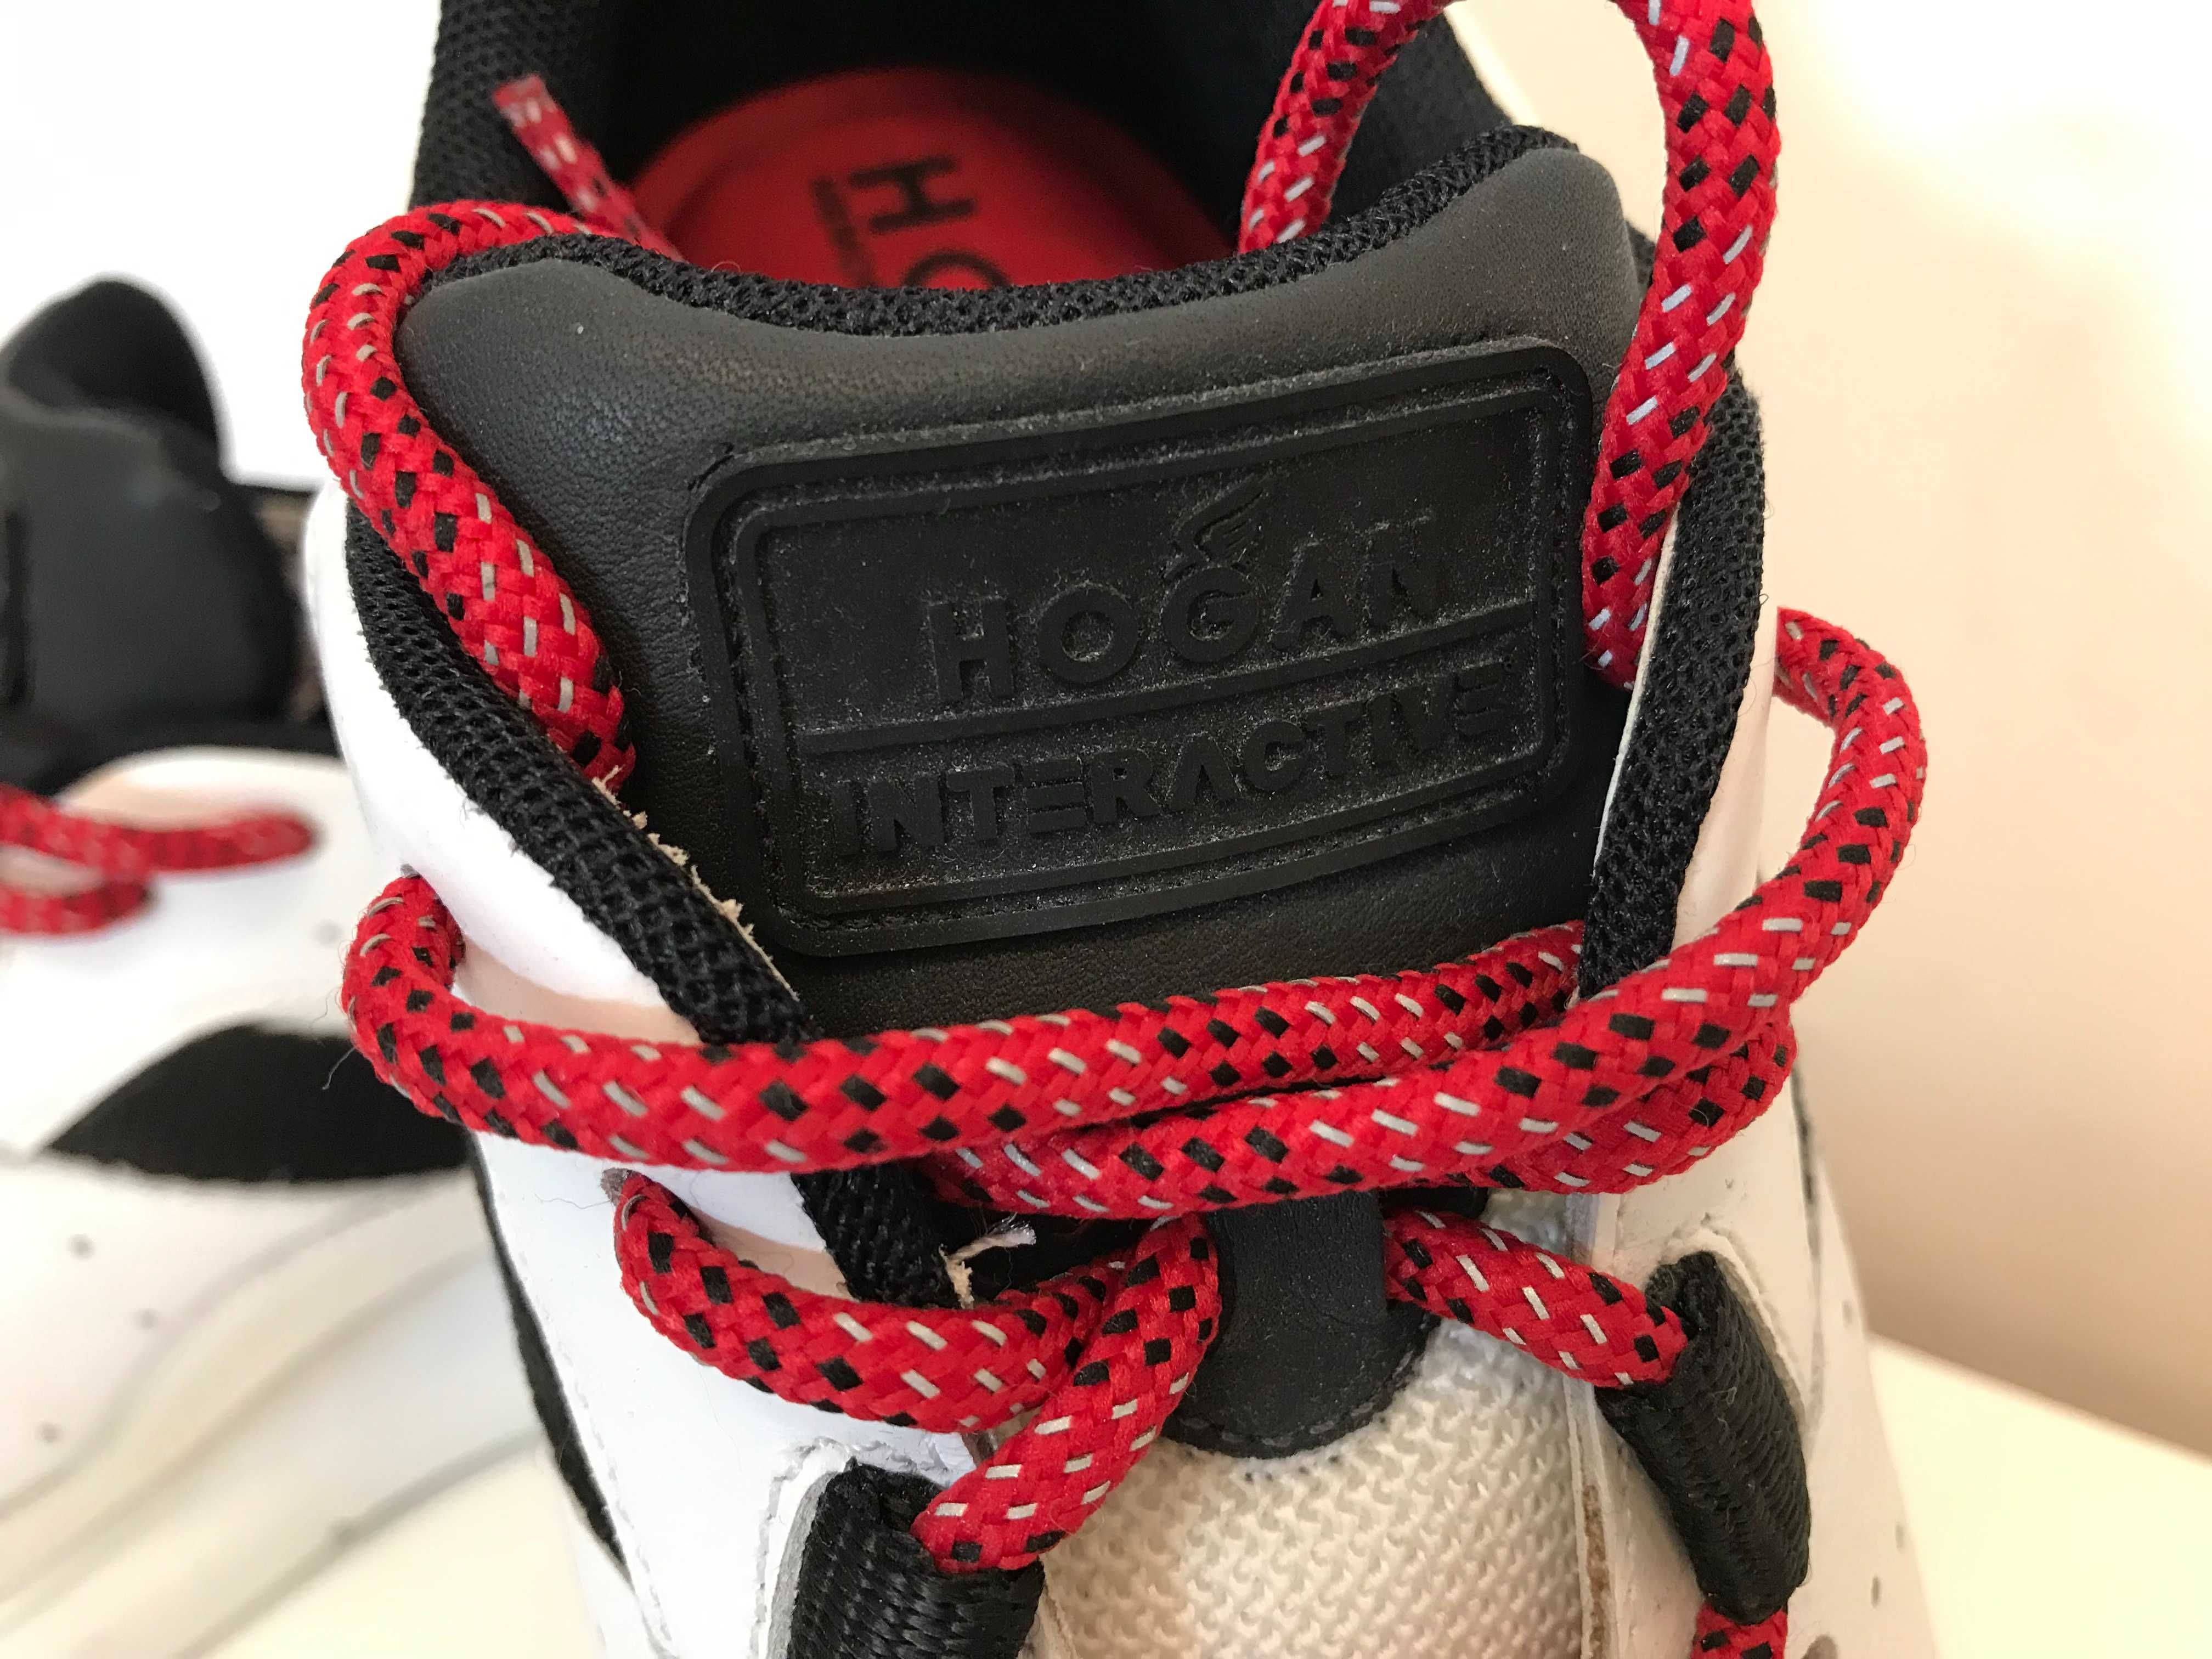 Hogan sneakers 40, autentici